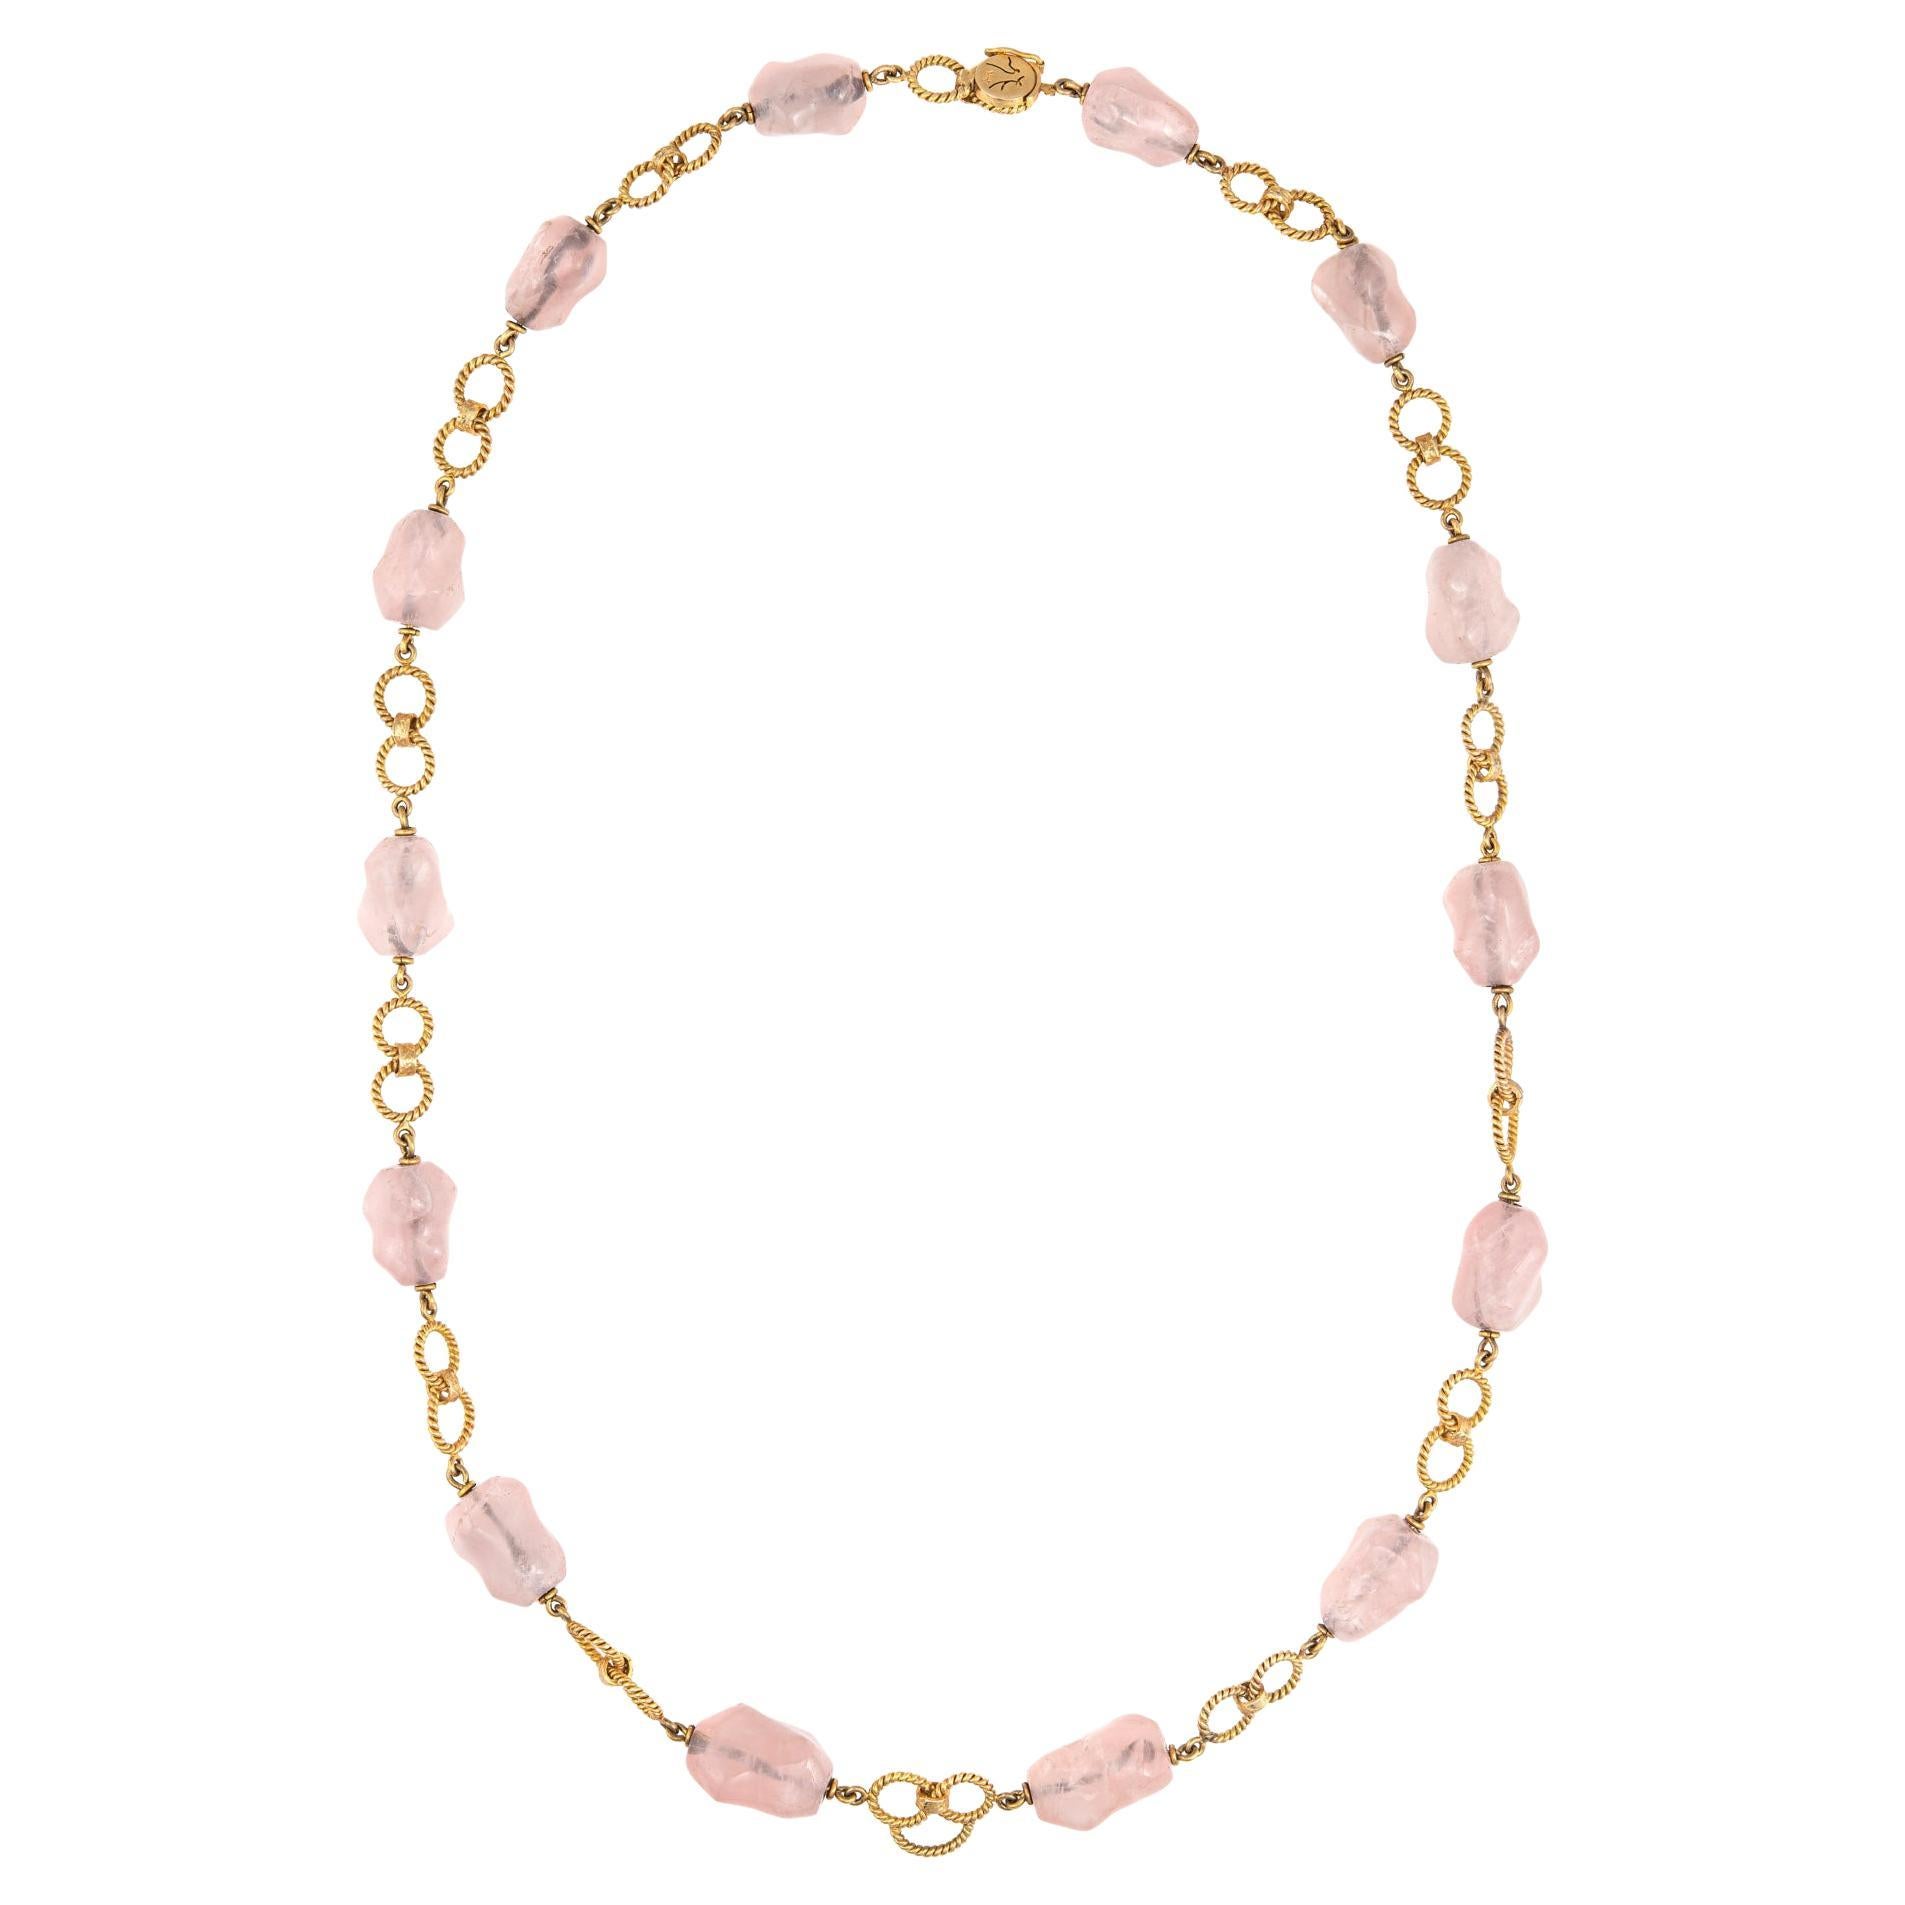 Vintage 70s Rose Quartz Bead Necklace 14k Gold 26.5" Long Strand Round Links For Sale